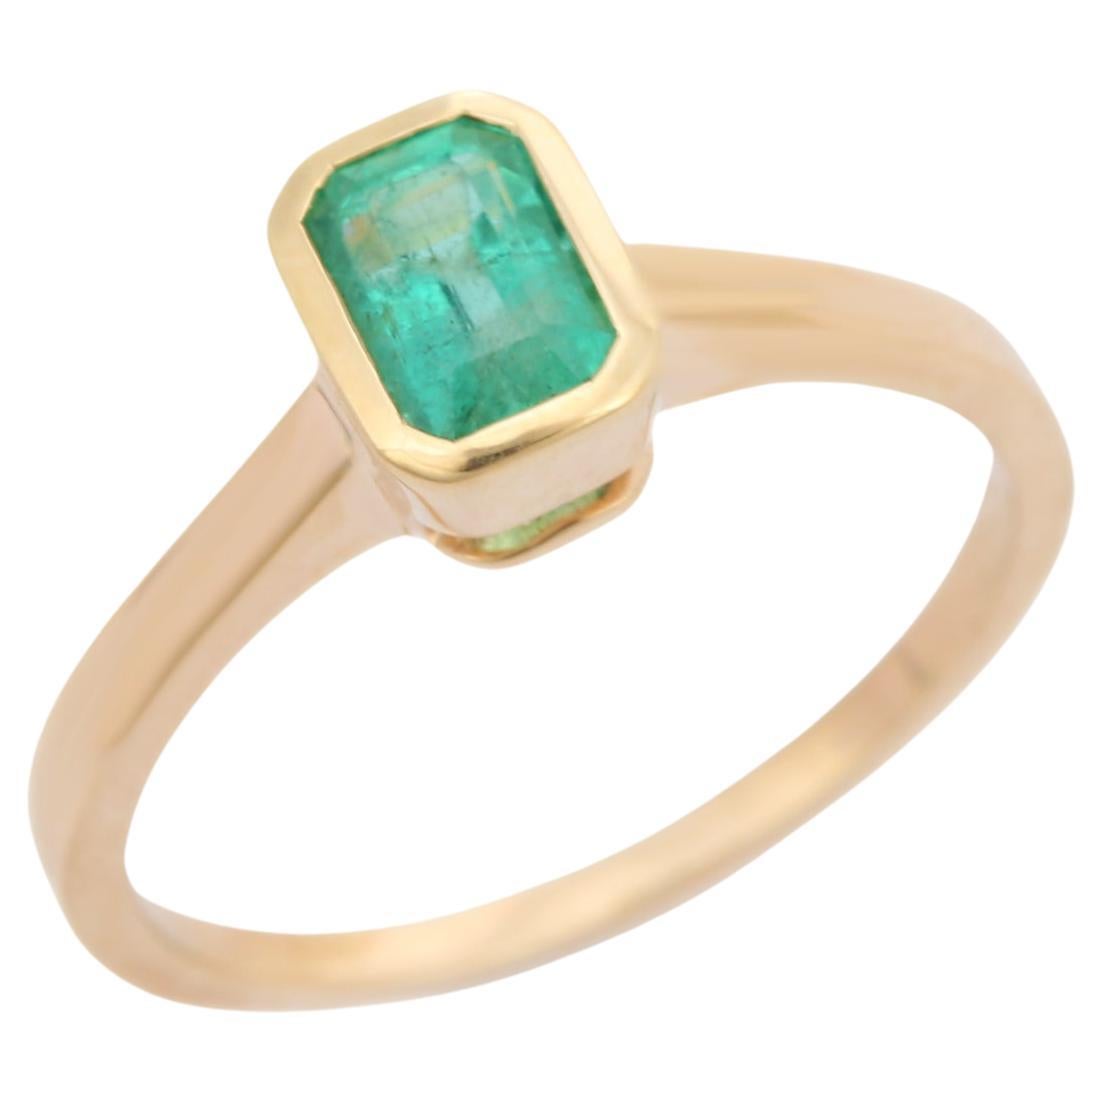 Handmade Bezel Set Emerald Single Stone Ring in 14k Solid Yellow Gold